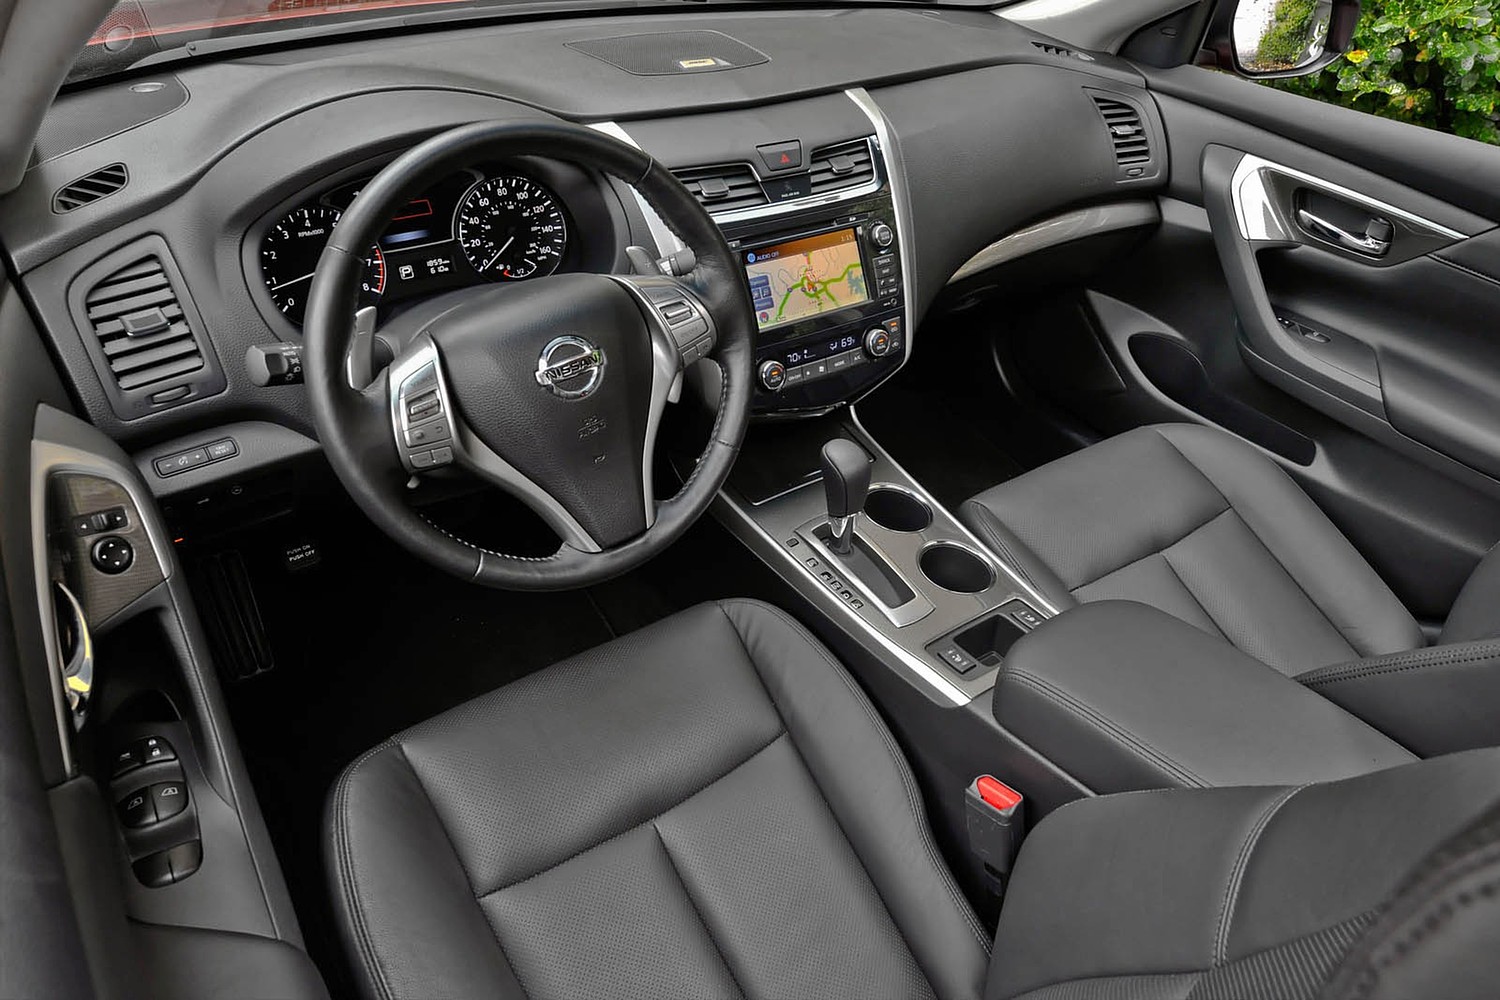 Nissan Altima 3.5 SL Sedan Interior (2013 model year shown)